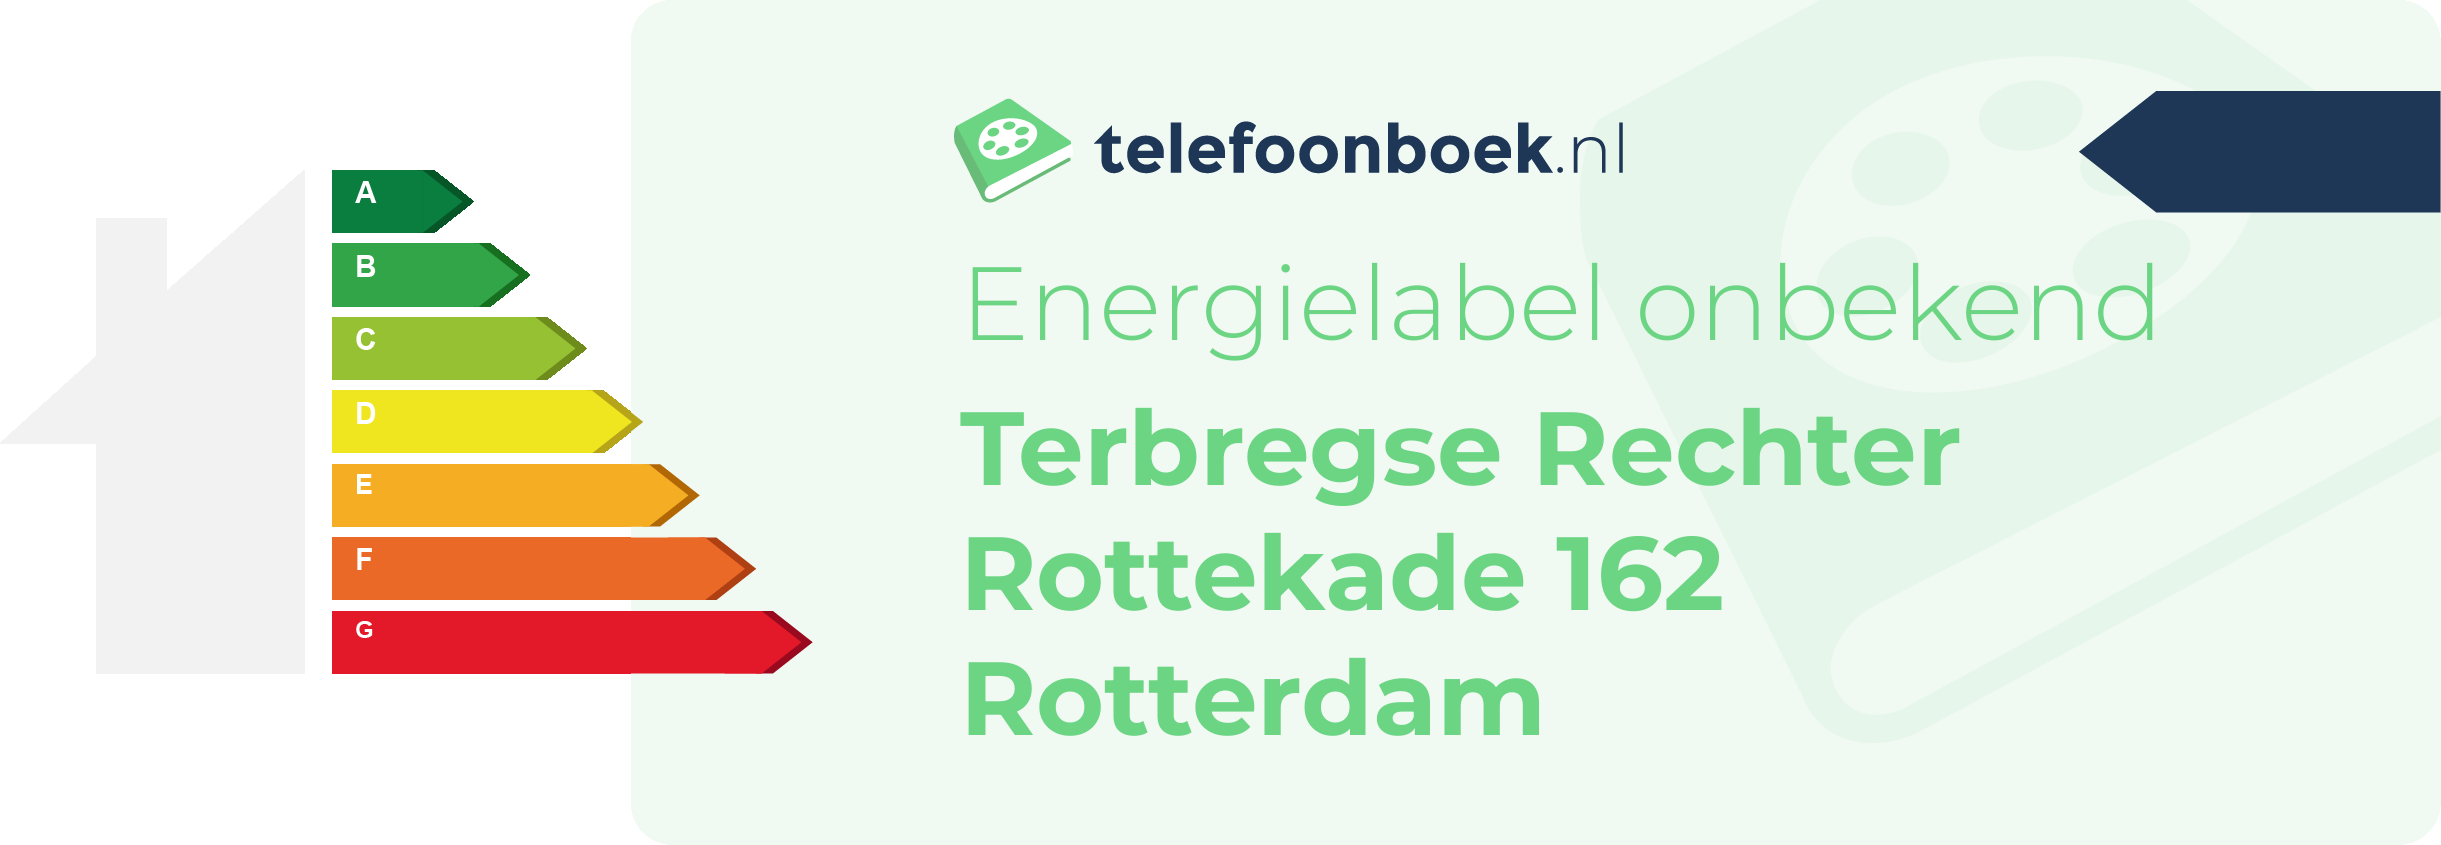 Energielabel Terbregse Rechter Rottekade 162 Rotterdam